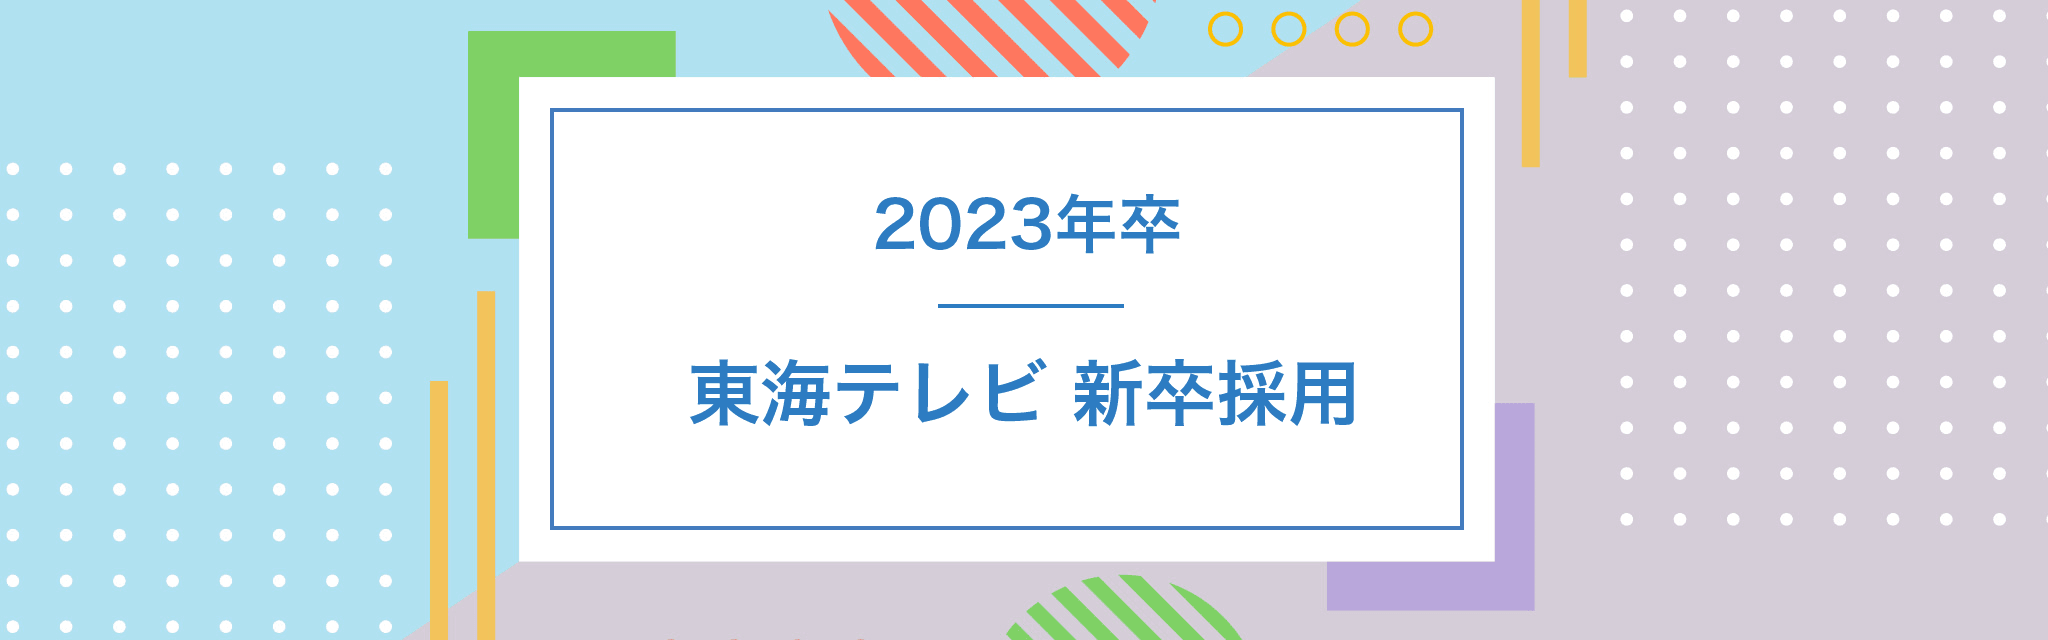 2023年卒 東海テレビ新卒採用